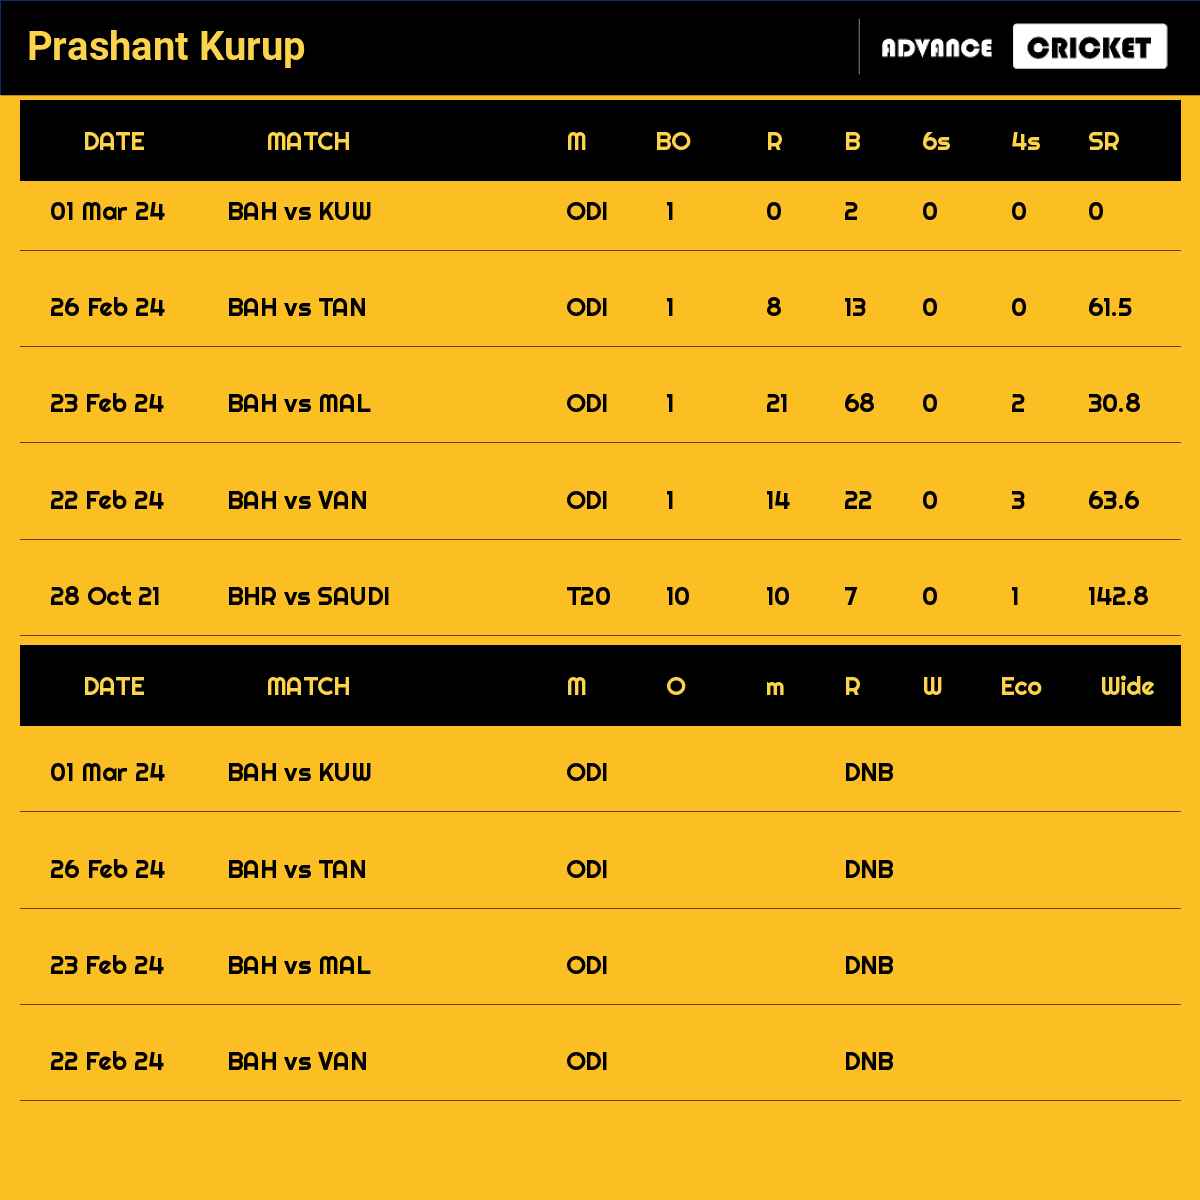 Prashant Kurup recent matches